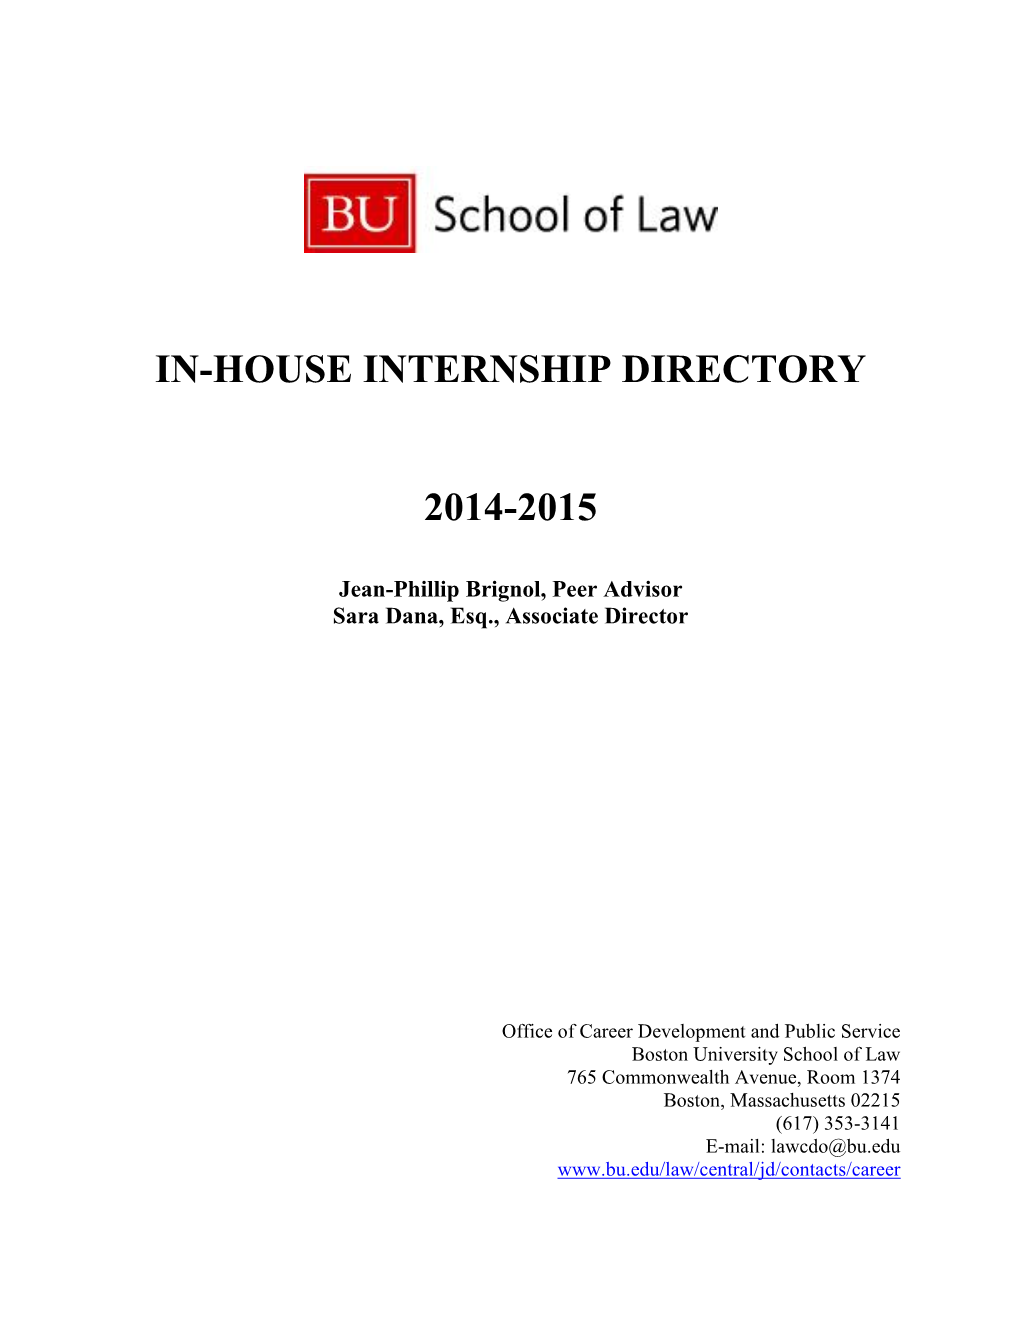 In-House Internship Directory 2014-2015